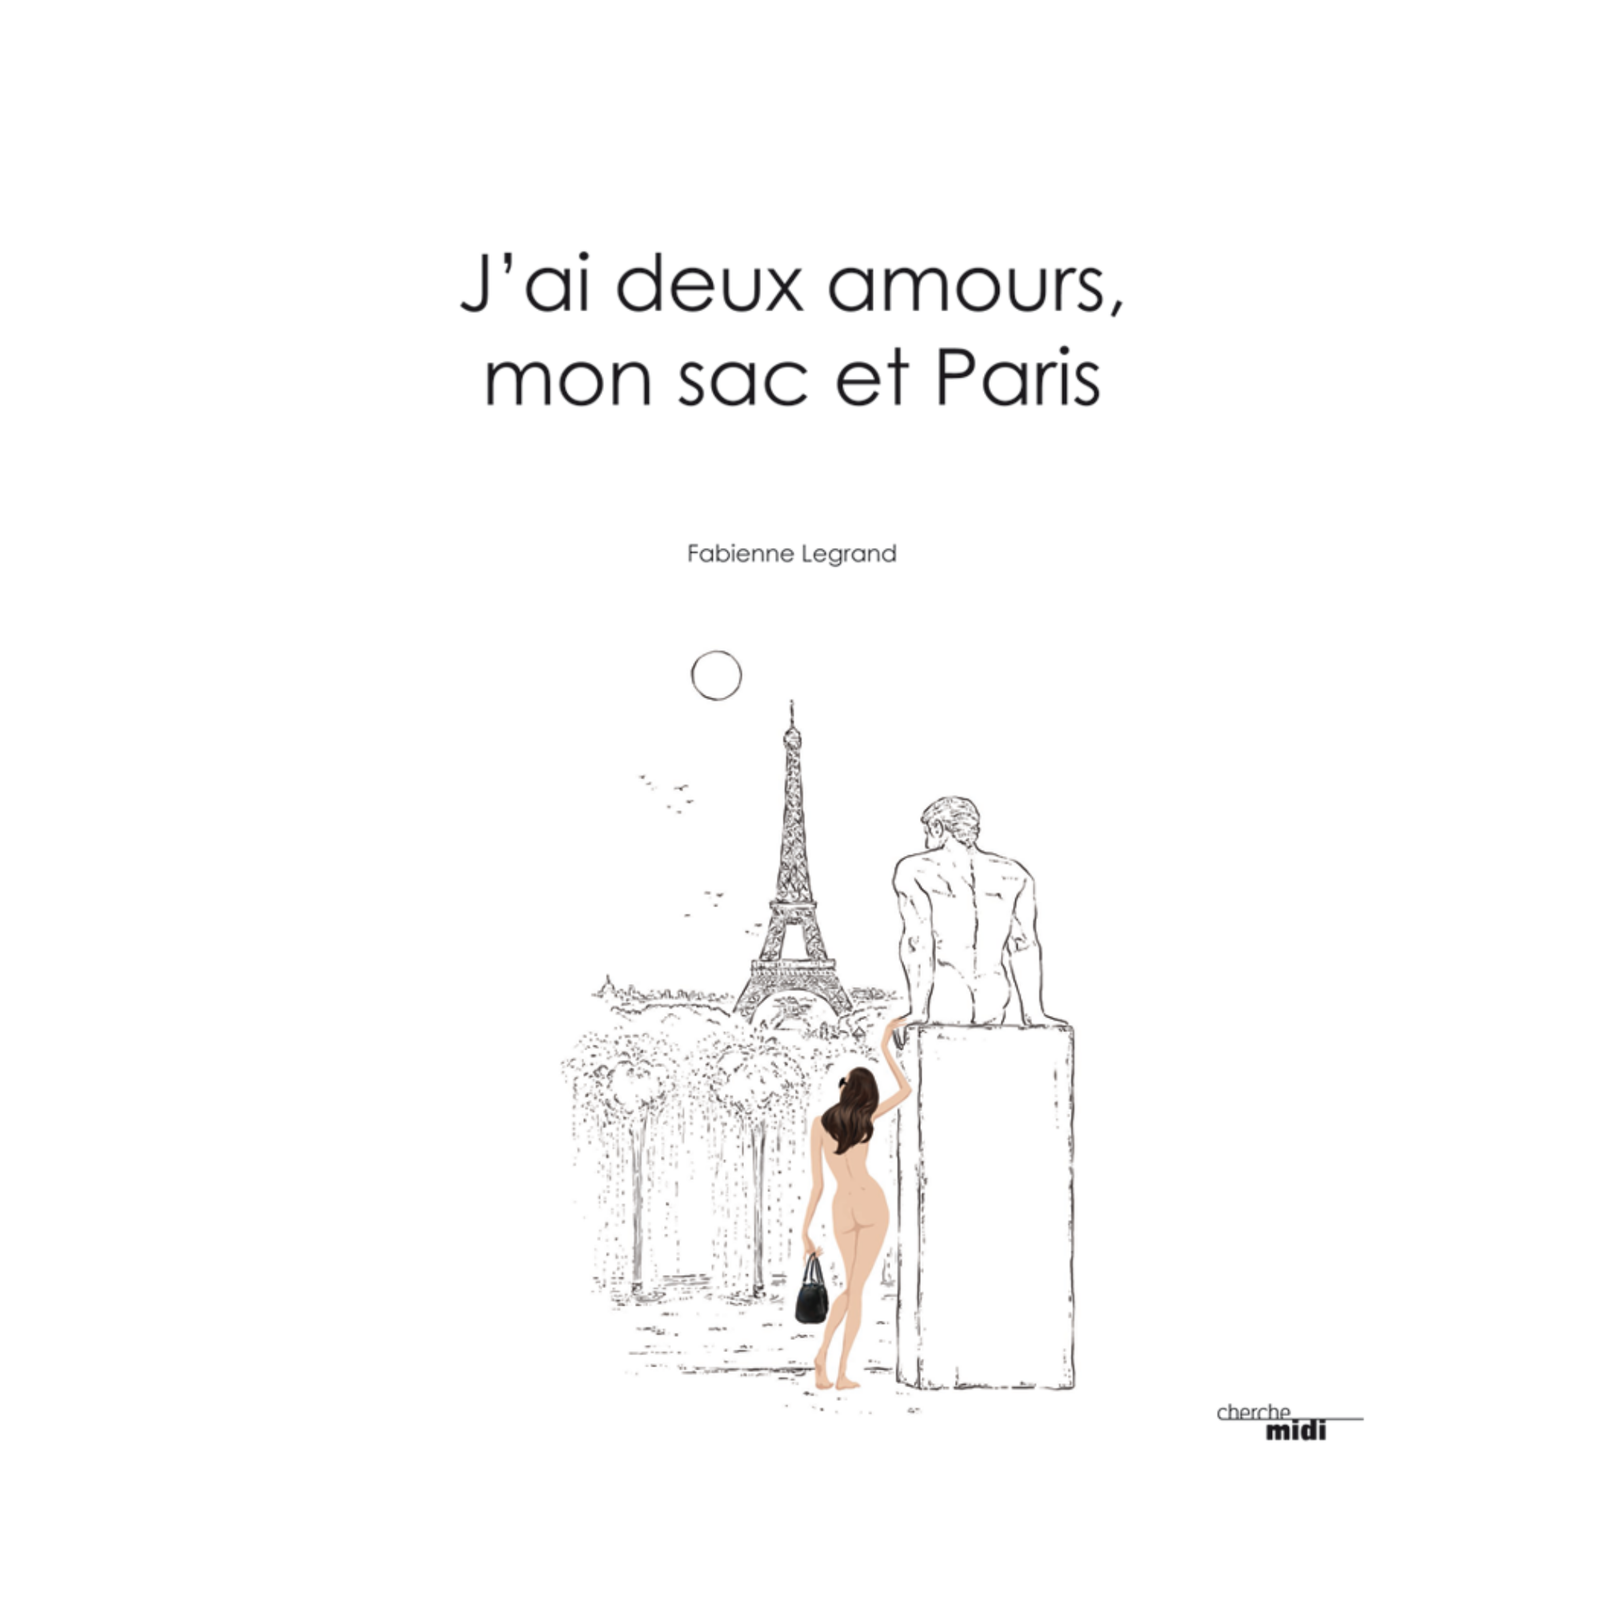 Other lines Book "Mon sac et Paris", French, Miscellaneous